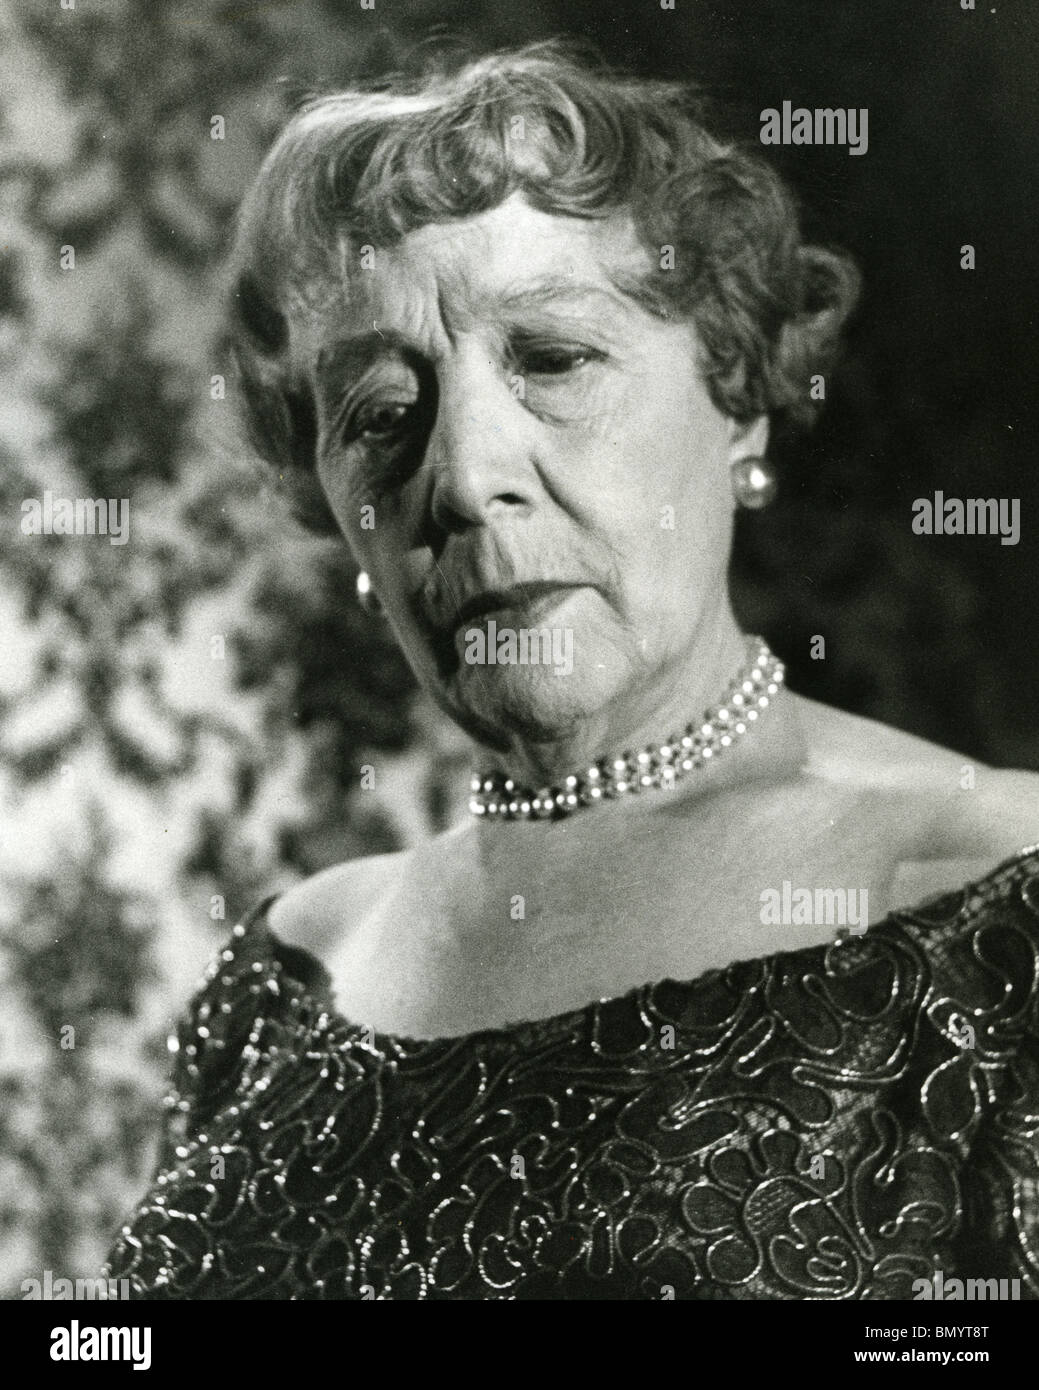 DAME EDITH MARY EVANS - tappa inglese e attrice cinematografica (1888-1976) Foto Stock